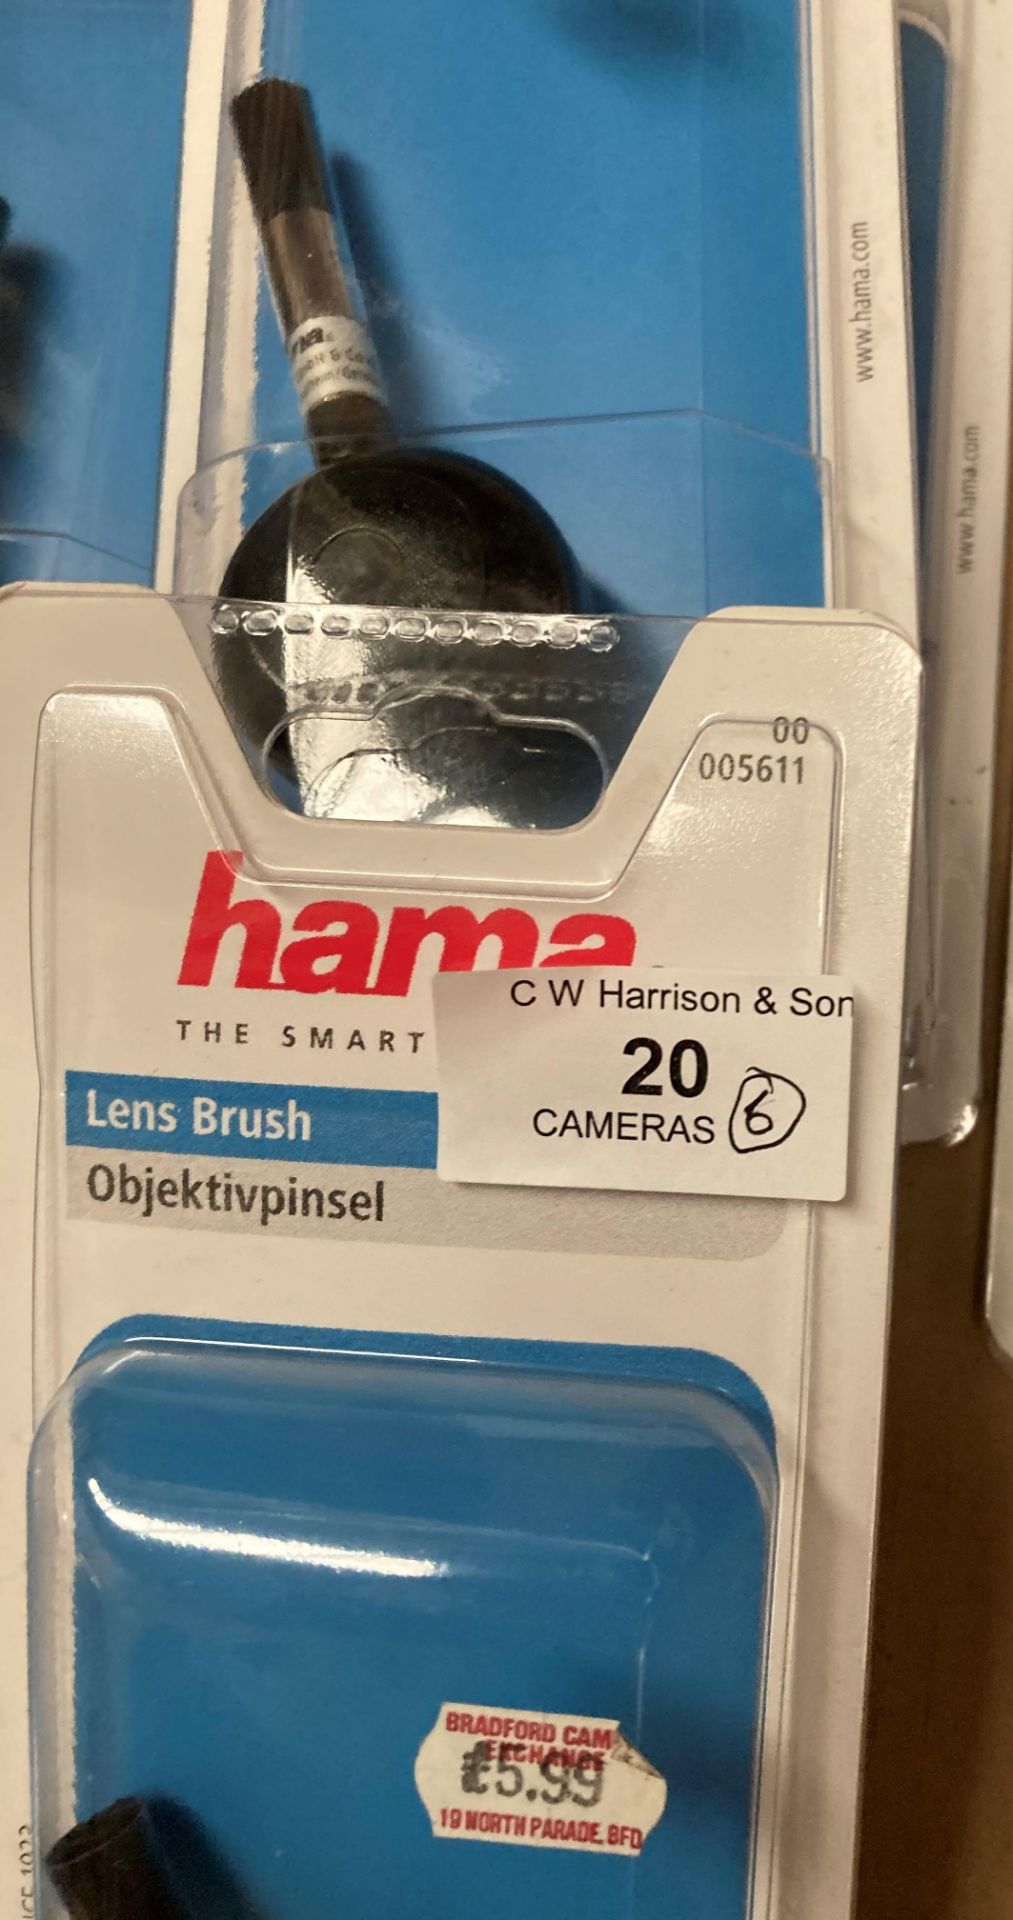 6 x Hama lens brushes PNEU 41 (RRP £5. - Image 2 of 2